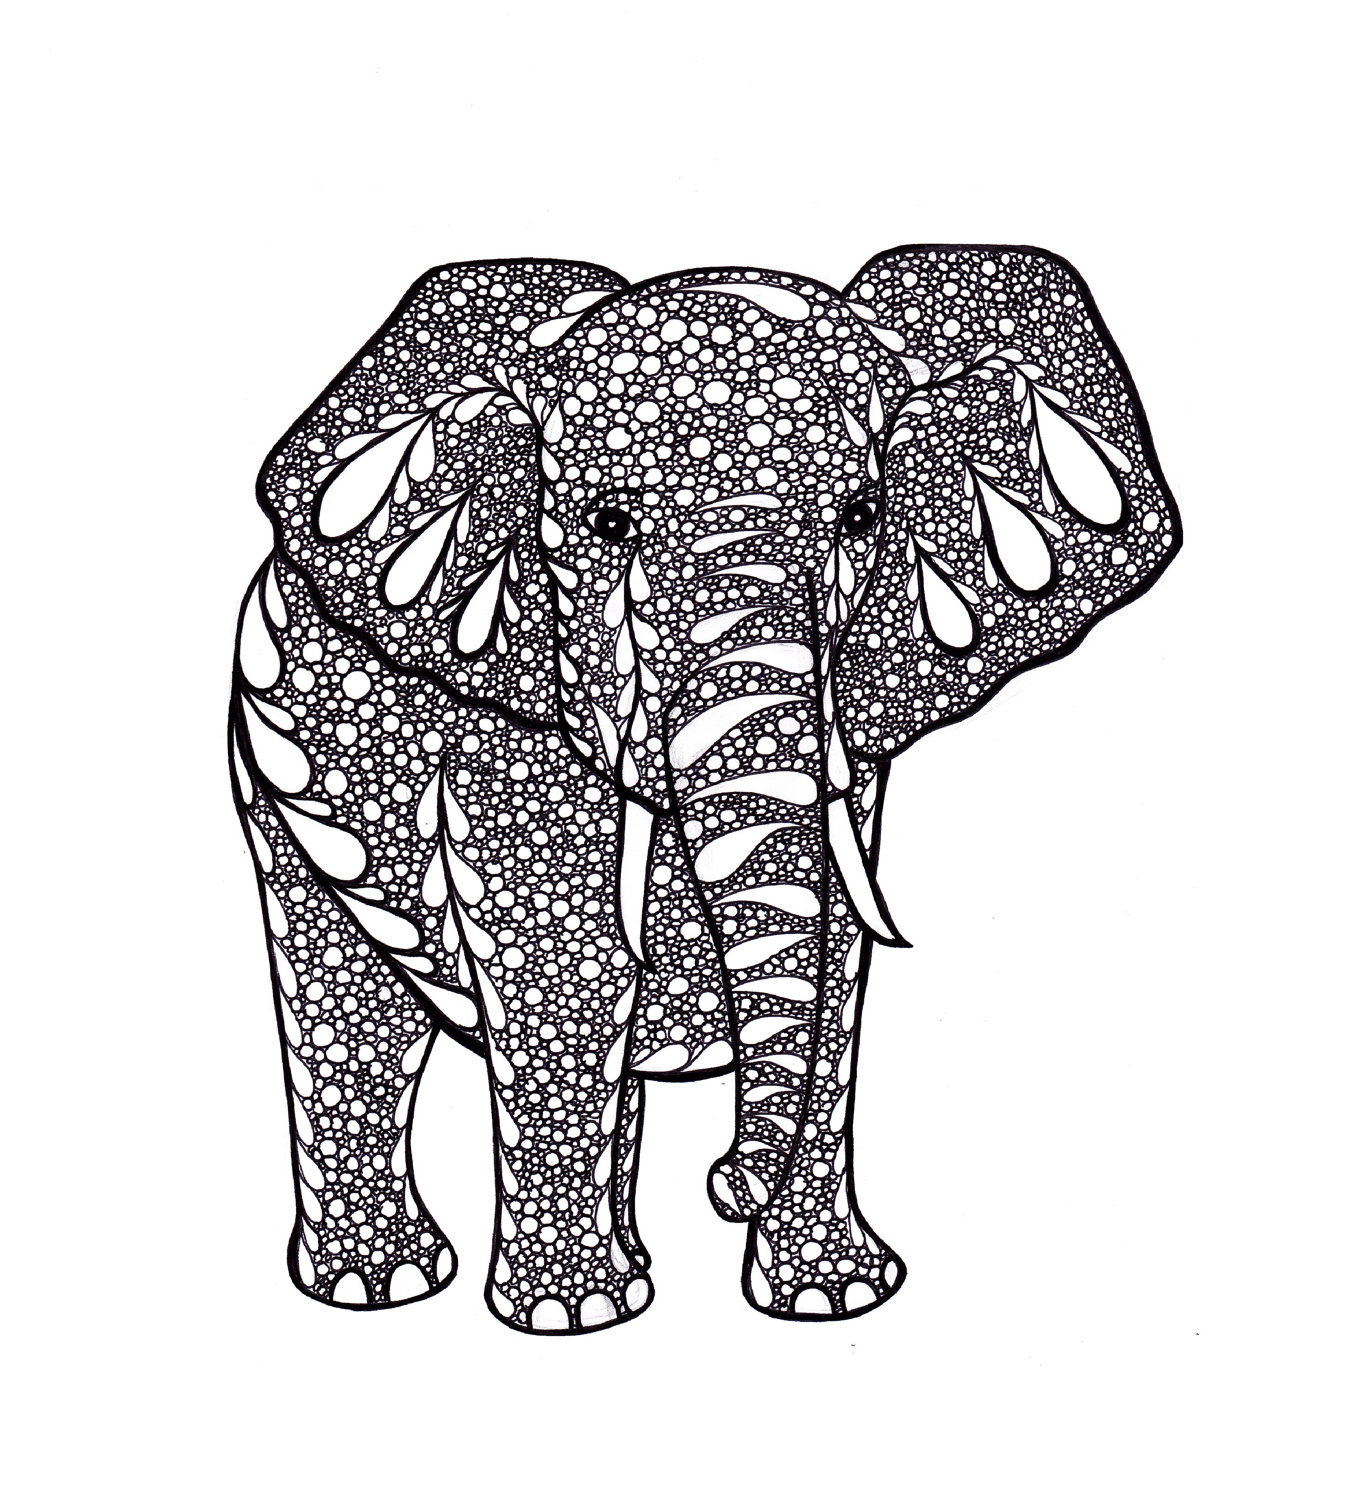 Printable Black and White Elephant Art